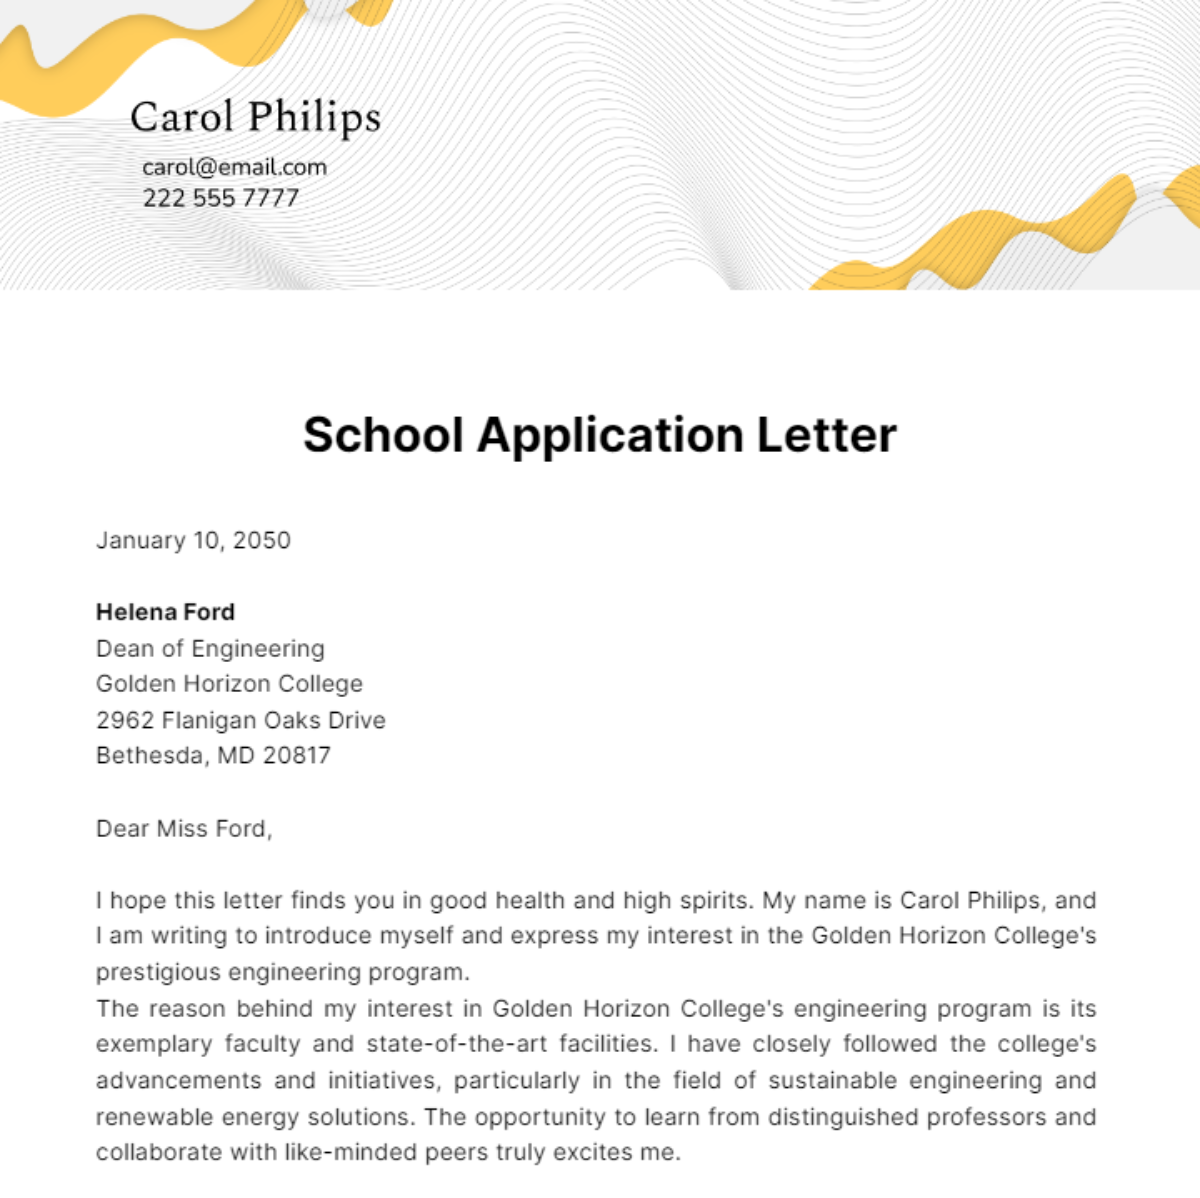 School Application Letter Template